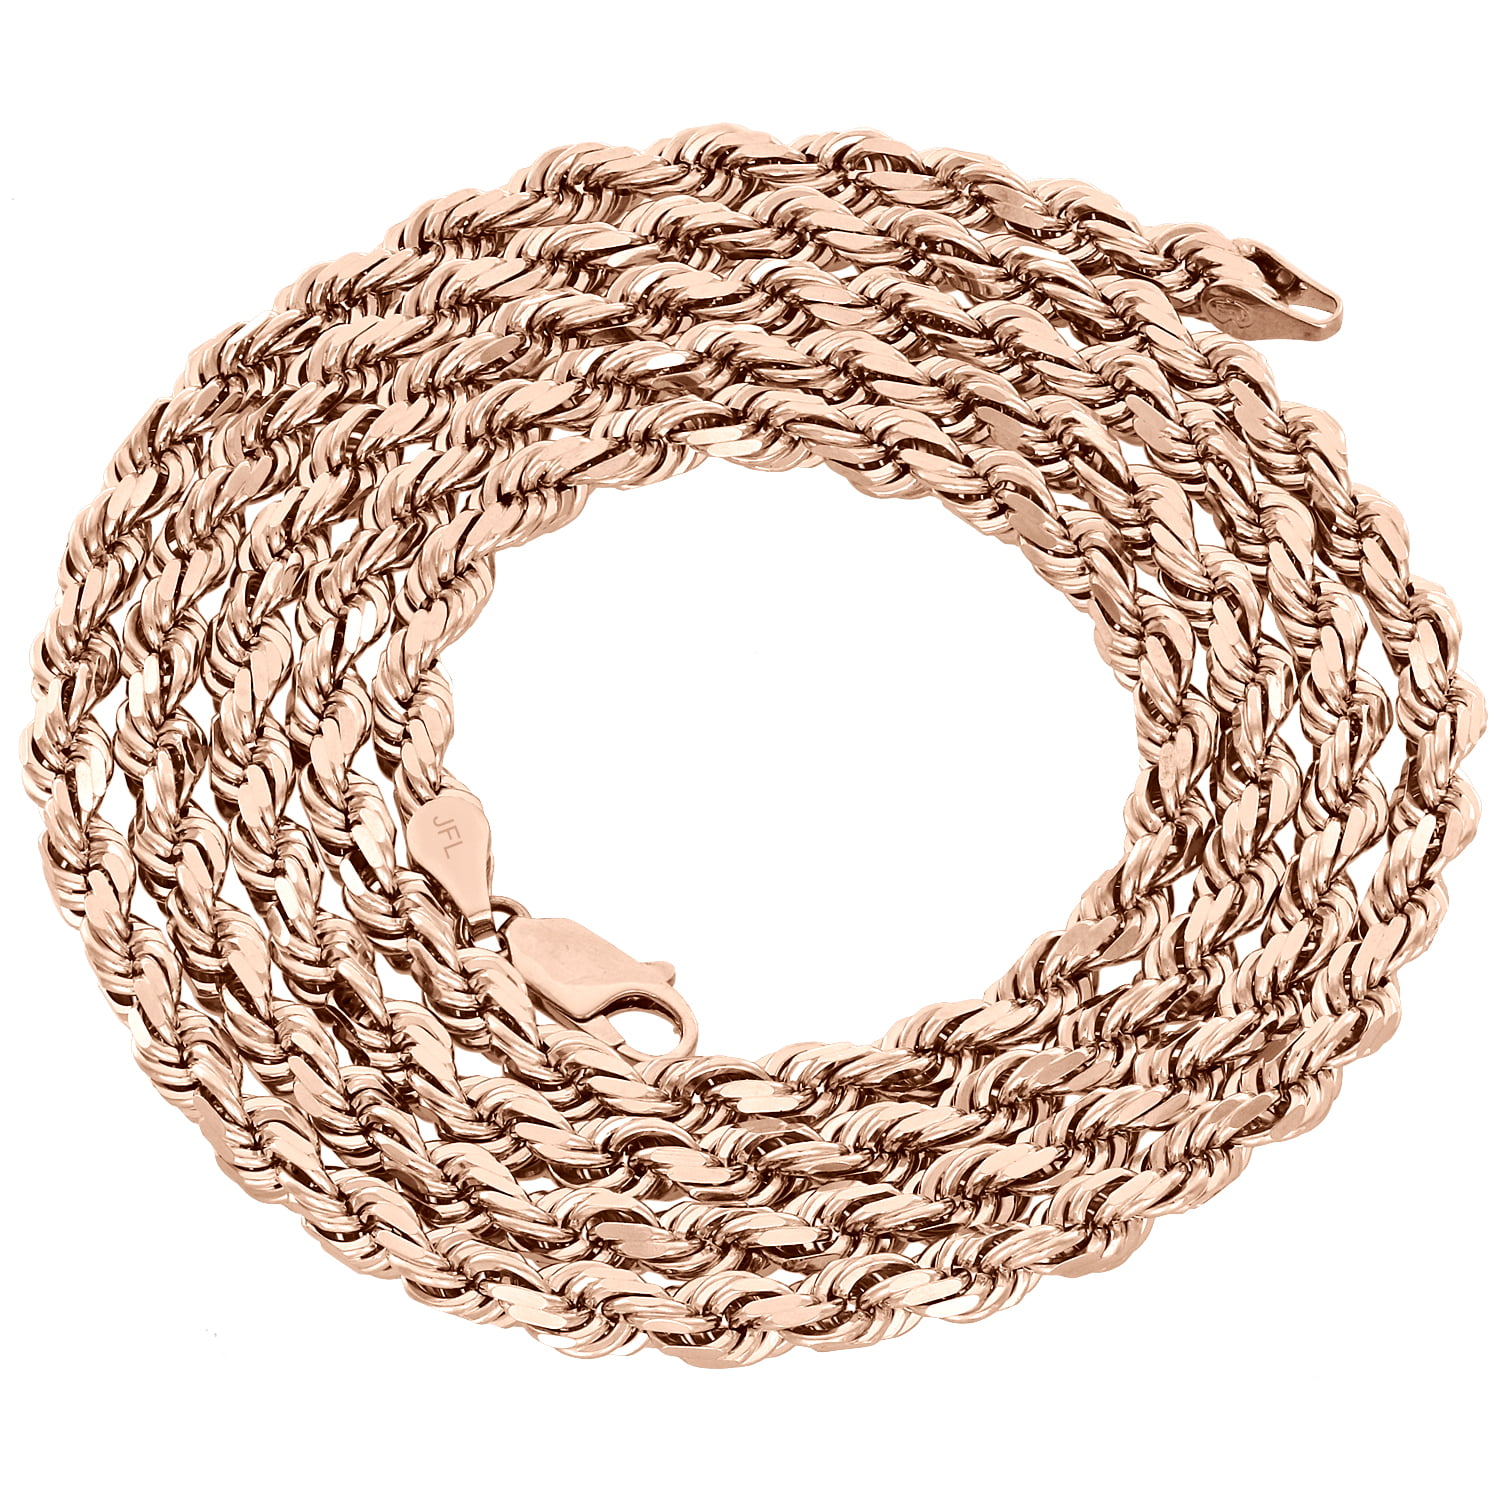 Solid 10k Rose Gold American Eagle Round Rope Design Frame Necklace